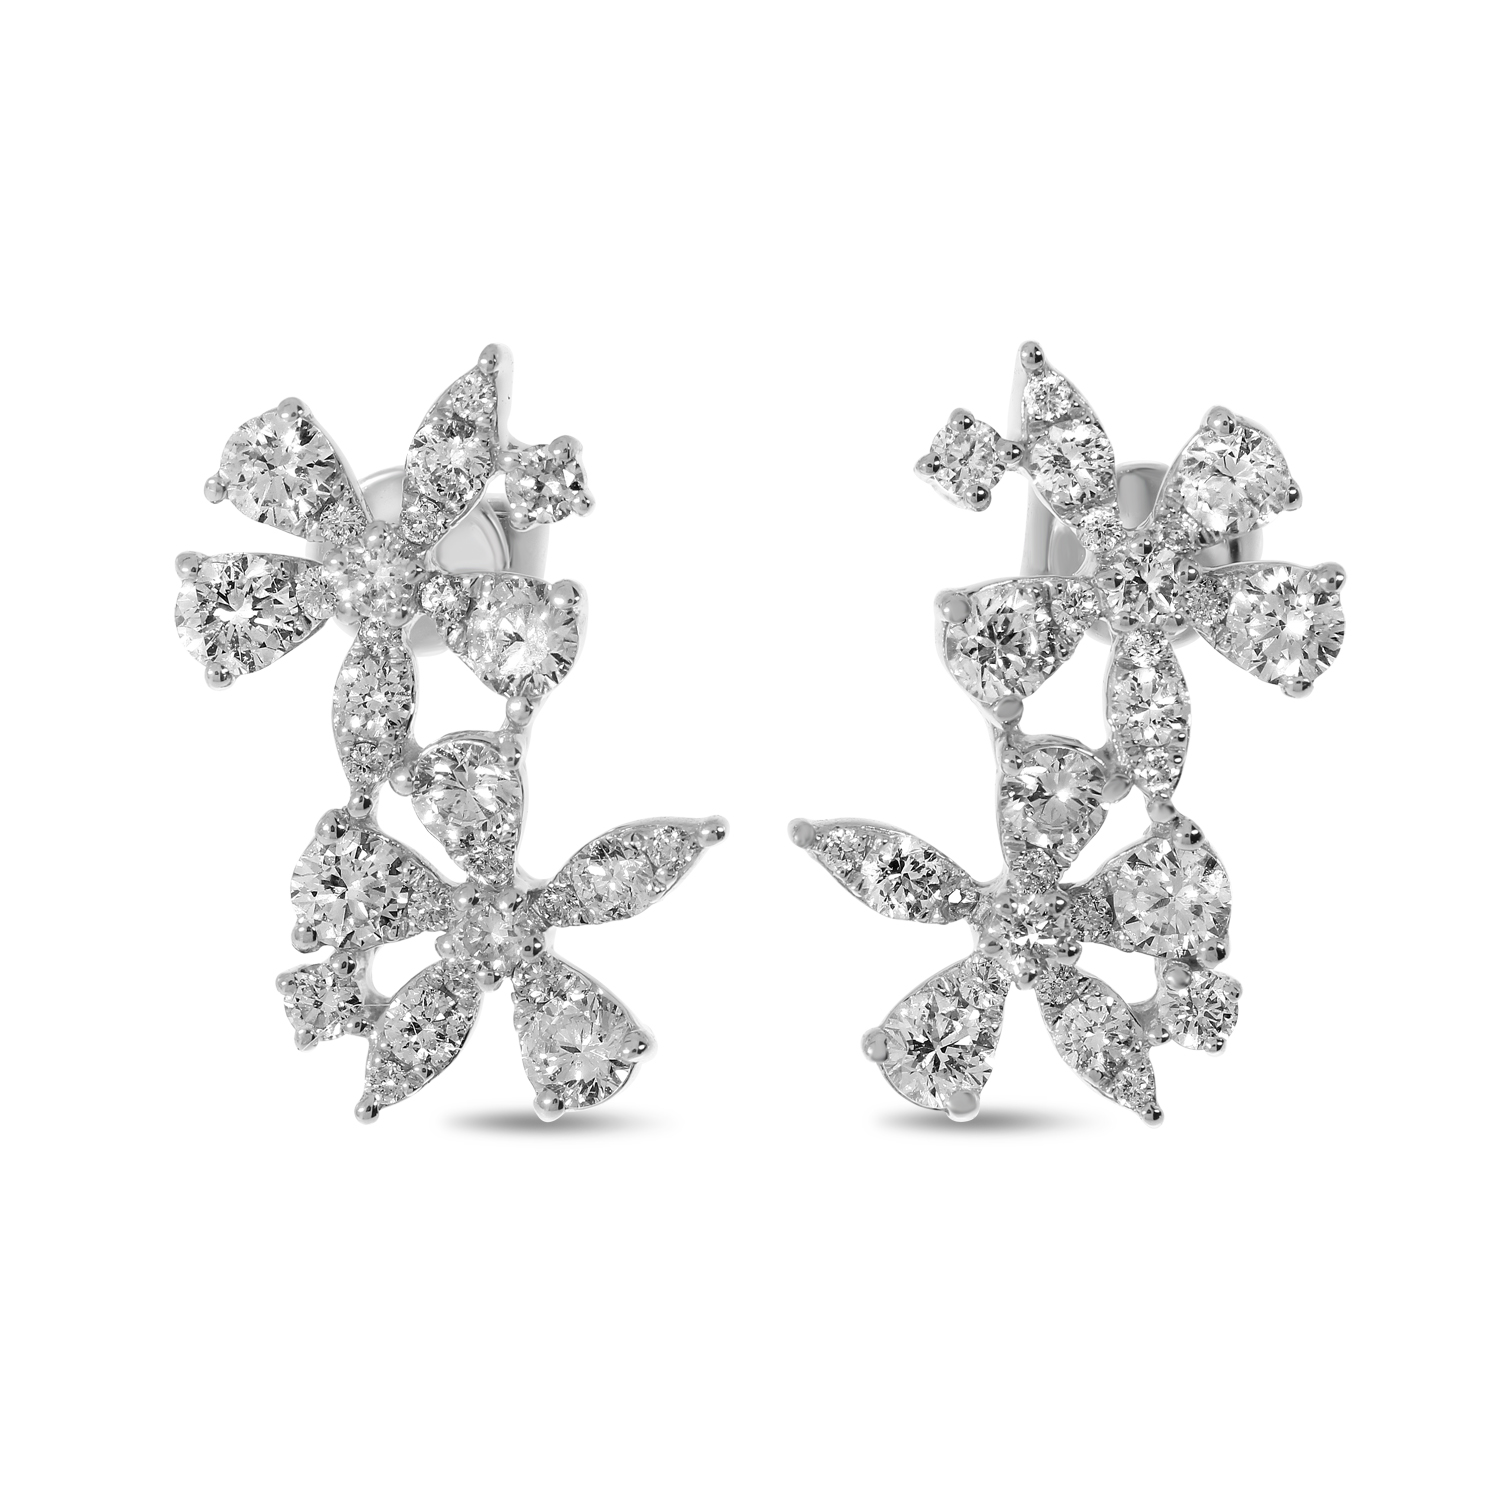 14K White Gold Double Diamond Floral Earrings